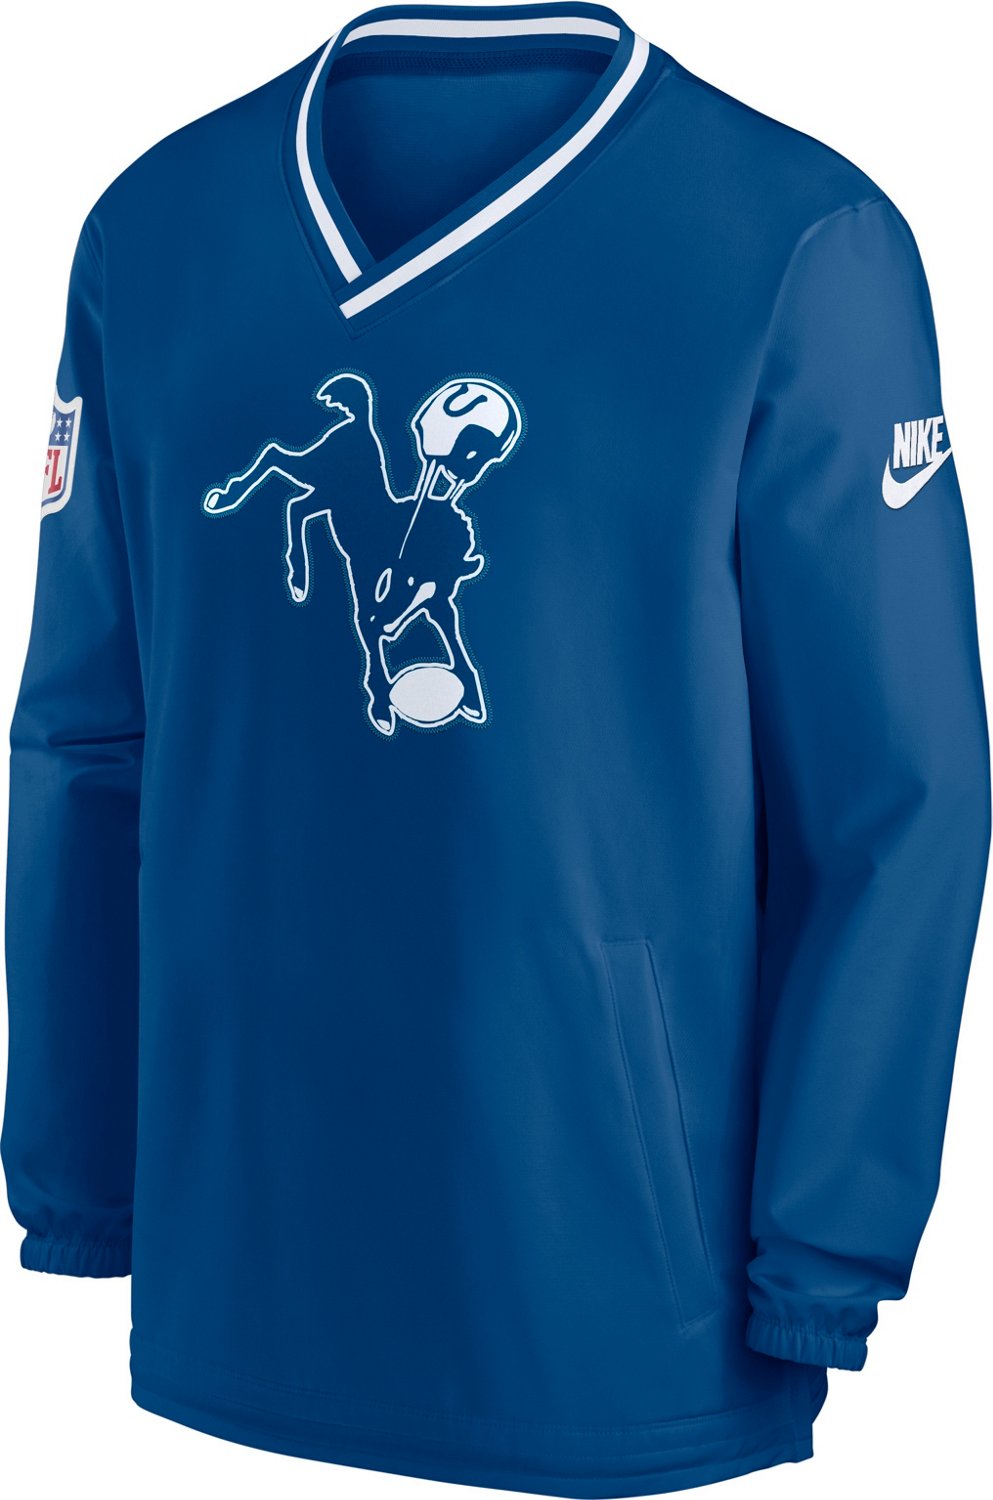 Nike Men's Indianapolis Colts Alt Long Sleeve V-neck Windbreaker